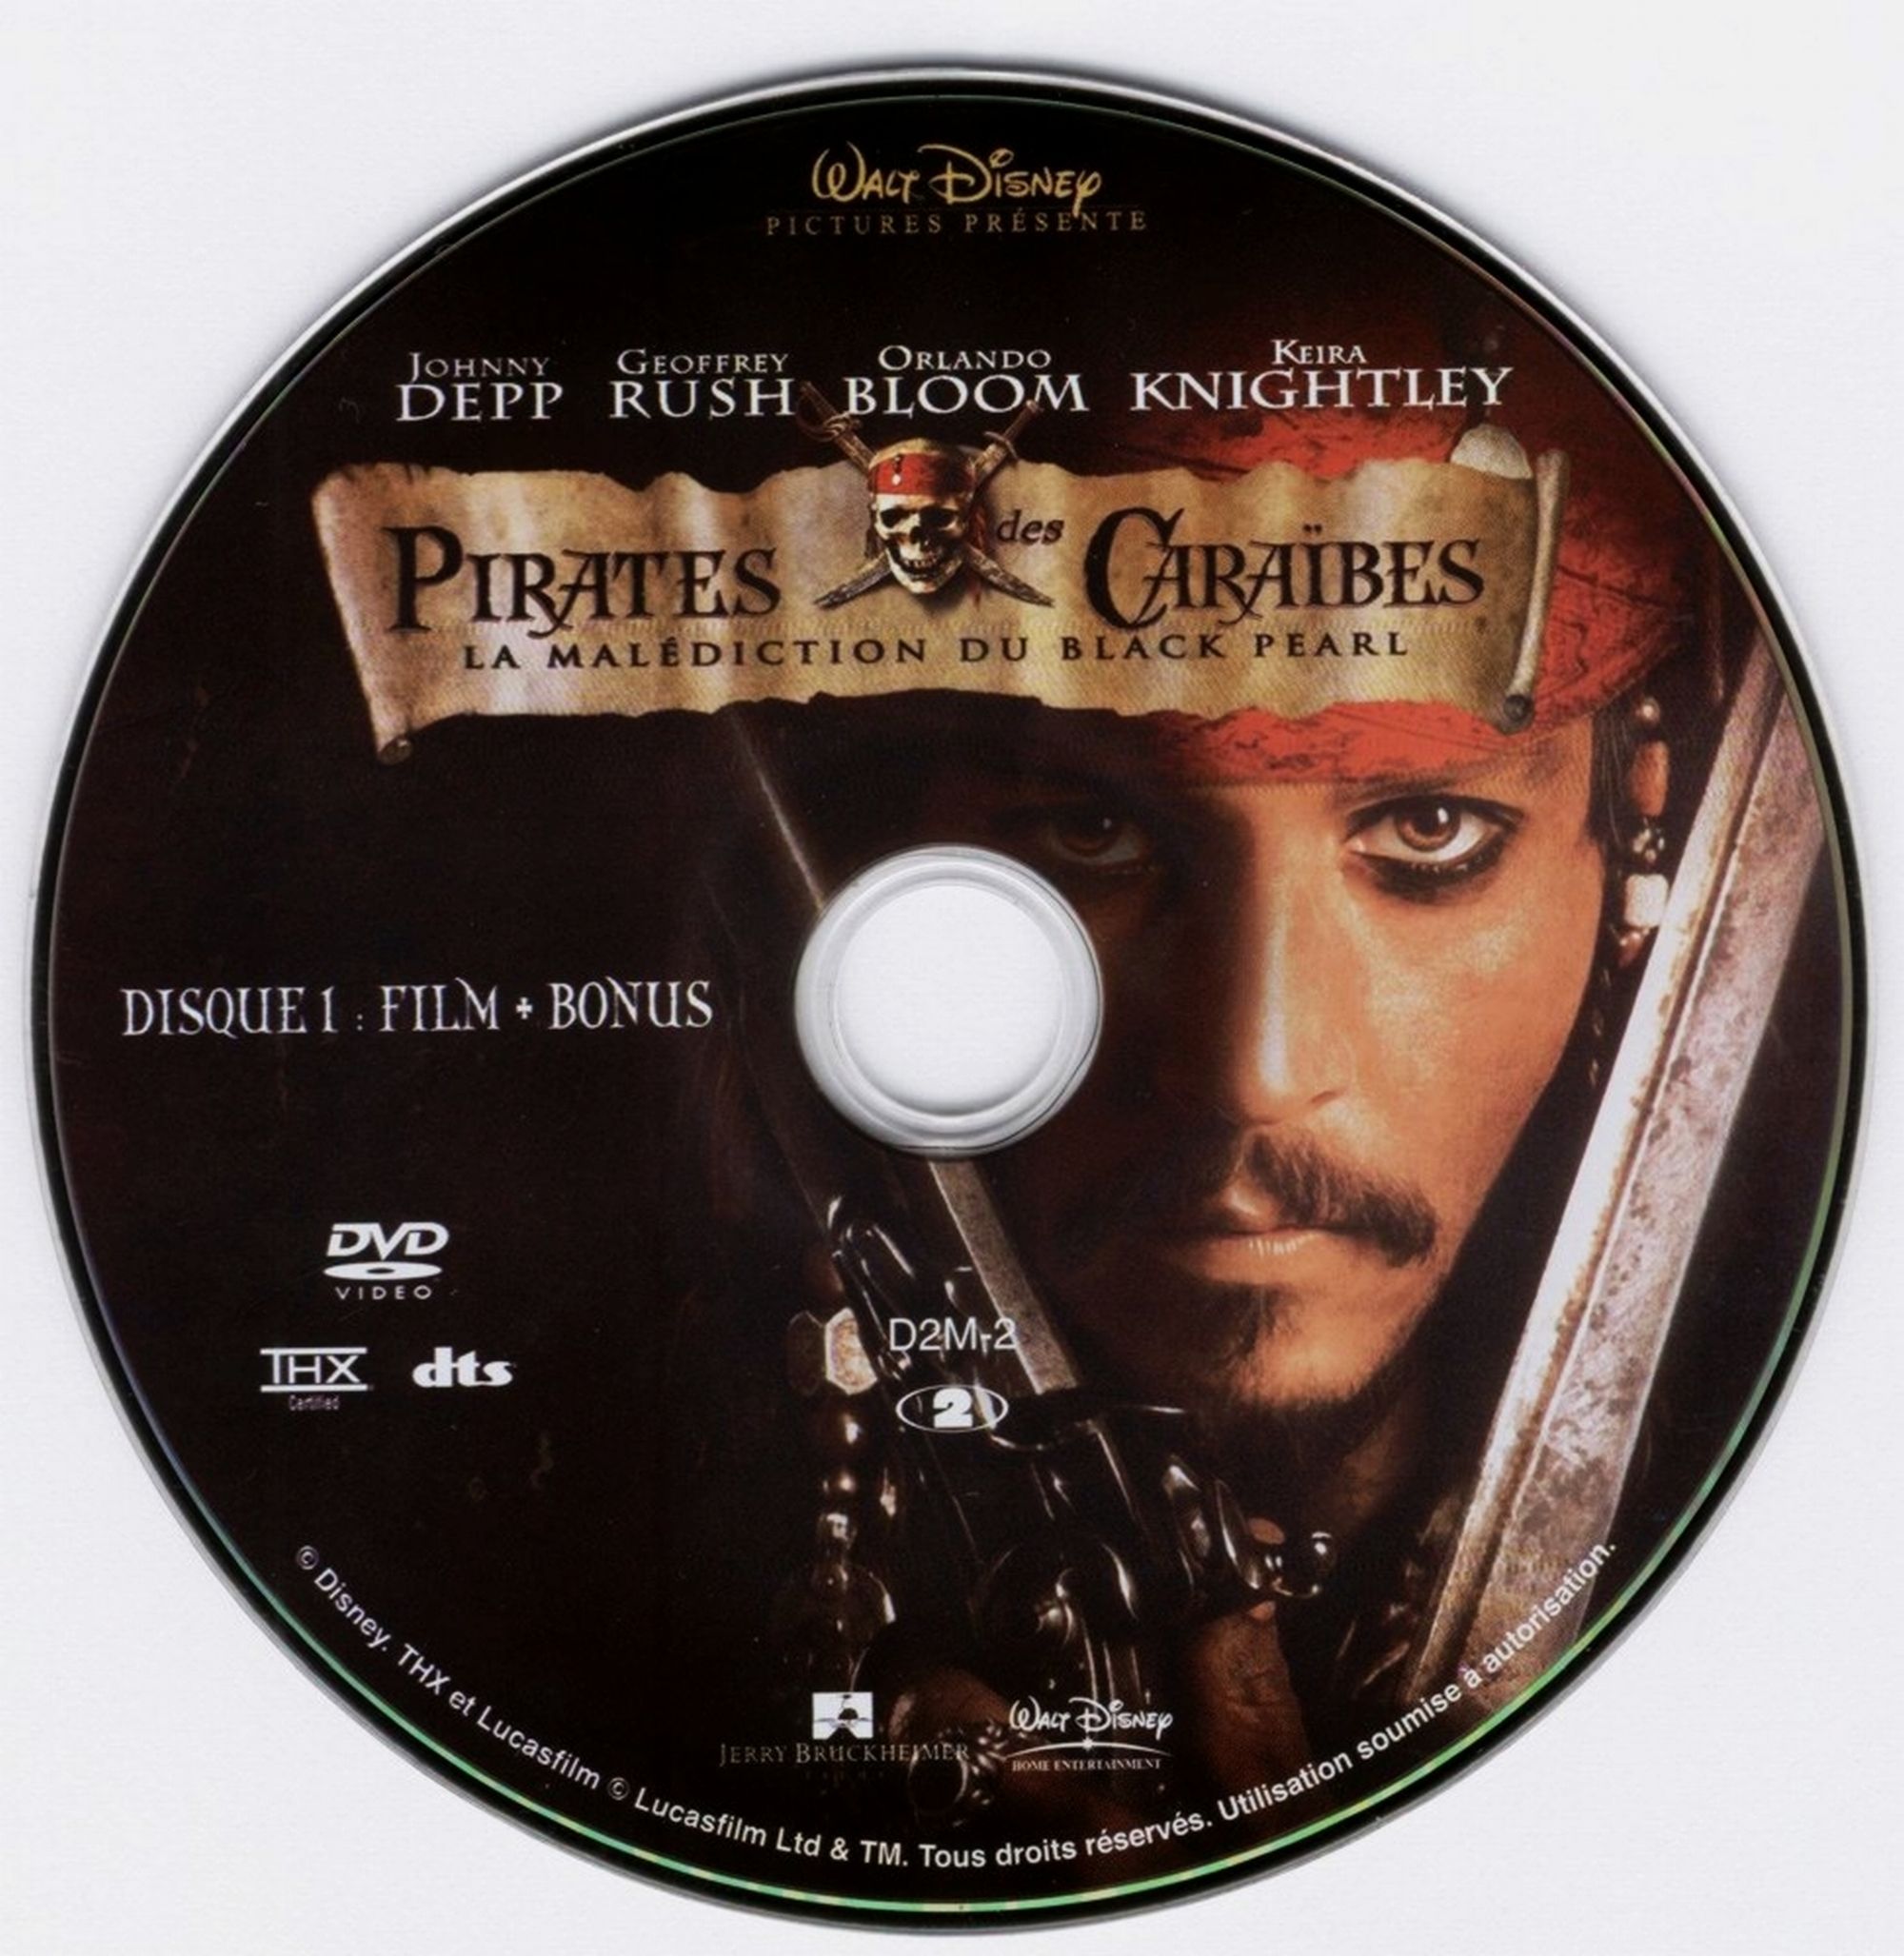 Pirates des Caraibes DISC 1